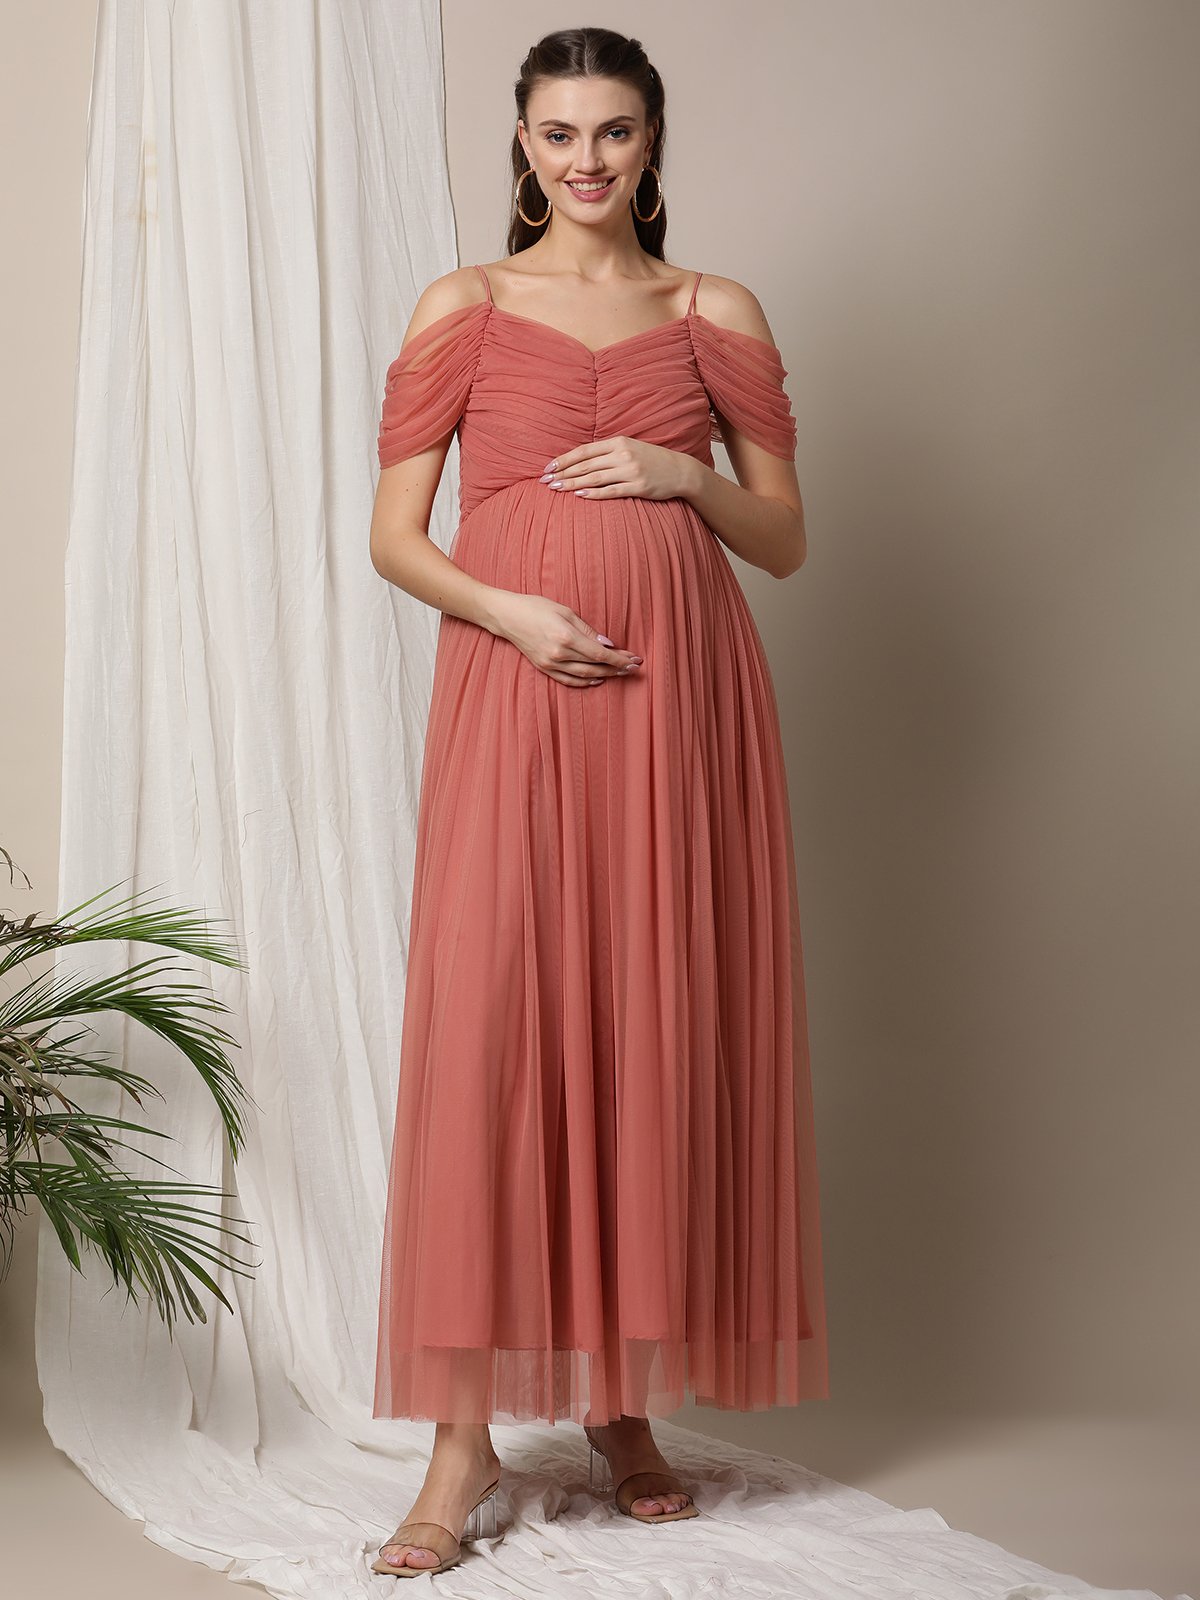 Buy Flowery Organza Dress,,,,,blue Dress,,,,gown Online in India - Etsy